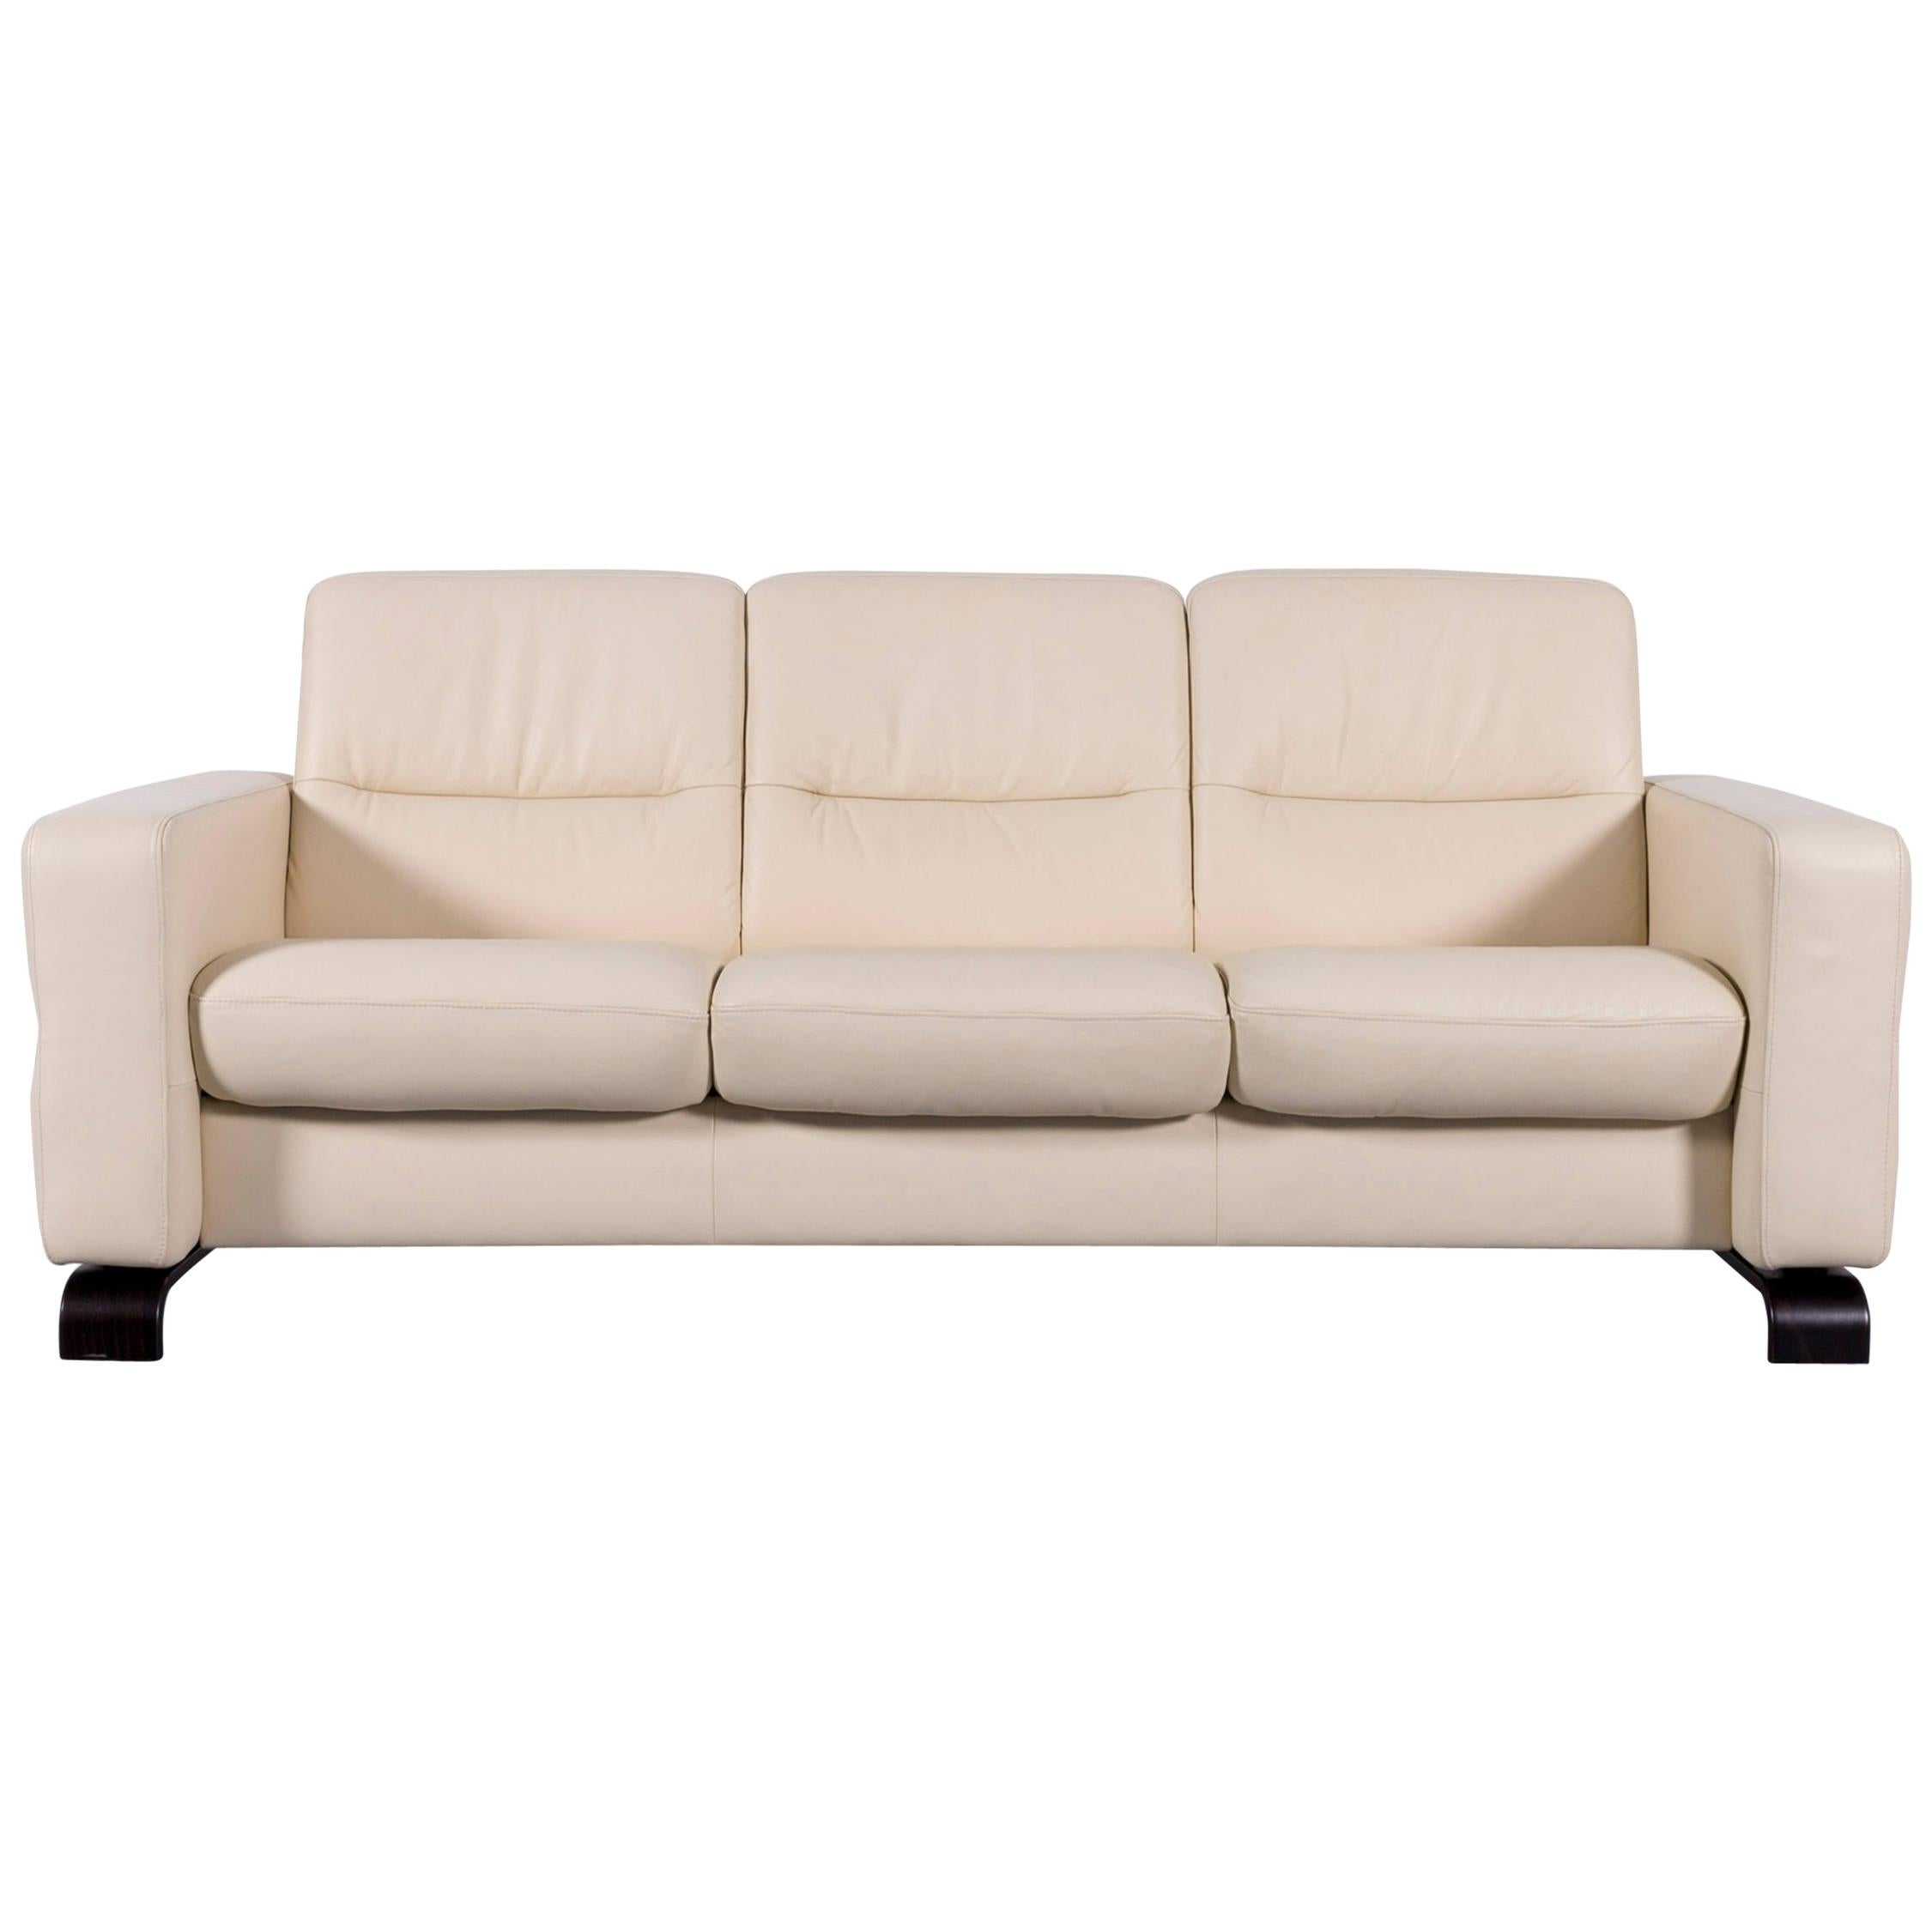 Ekornes Stressless Wave Sofa Off-White Leather Three-Seat Recliner